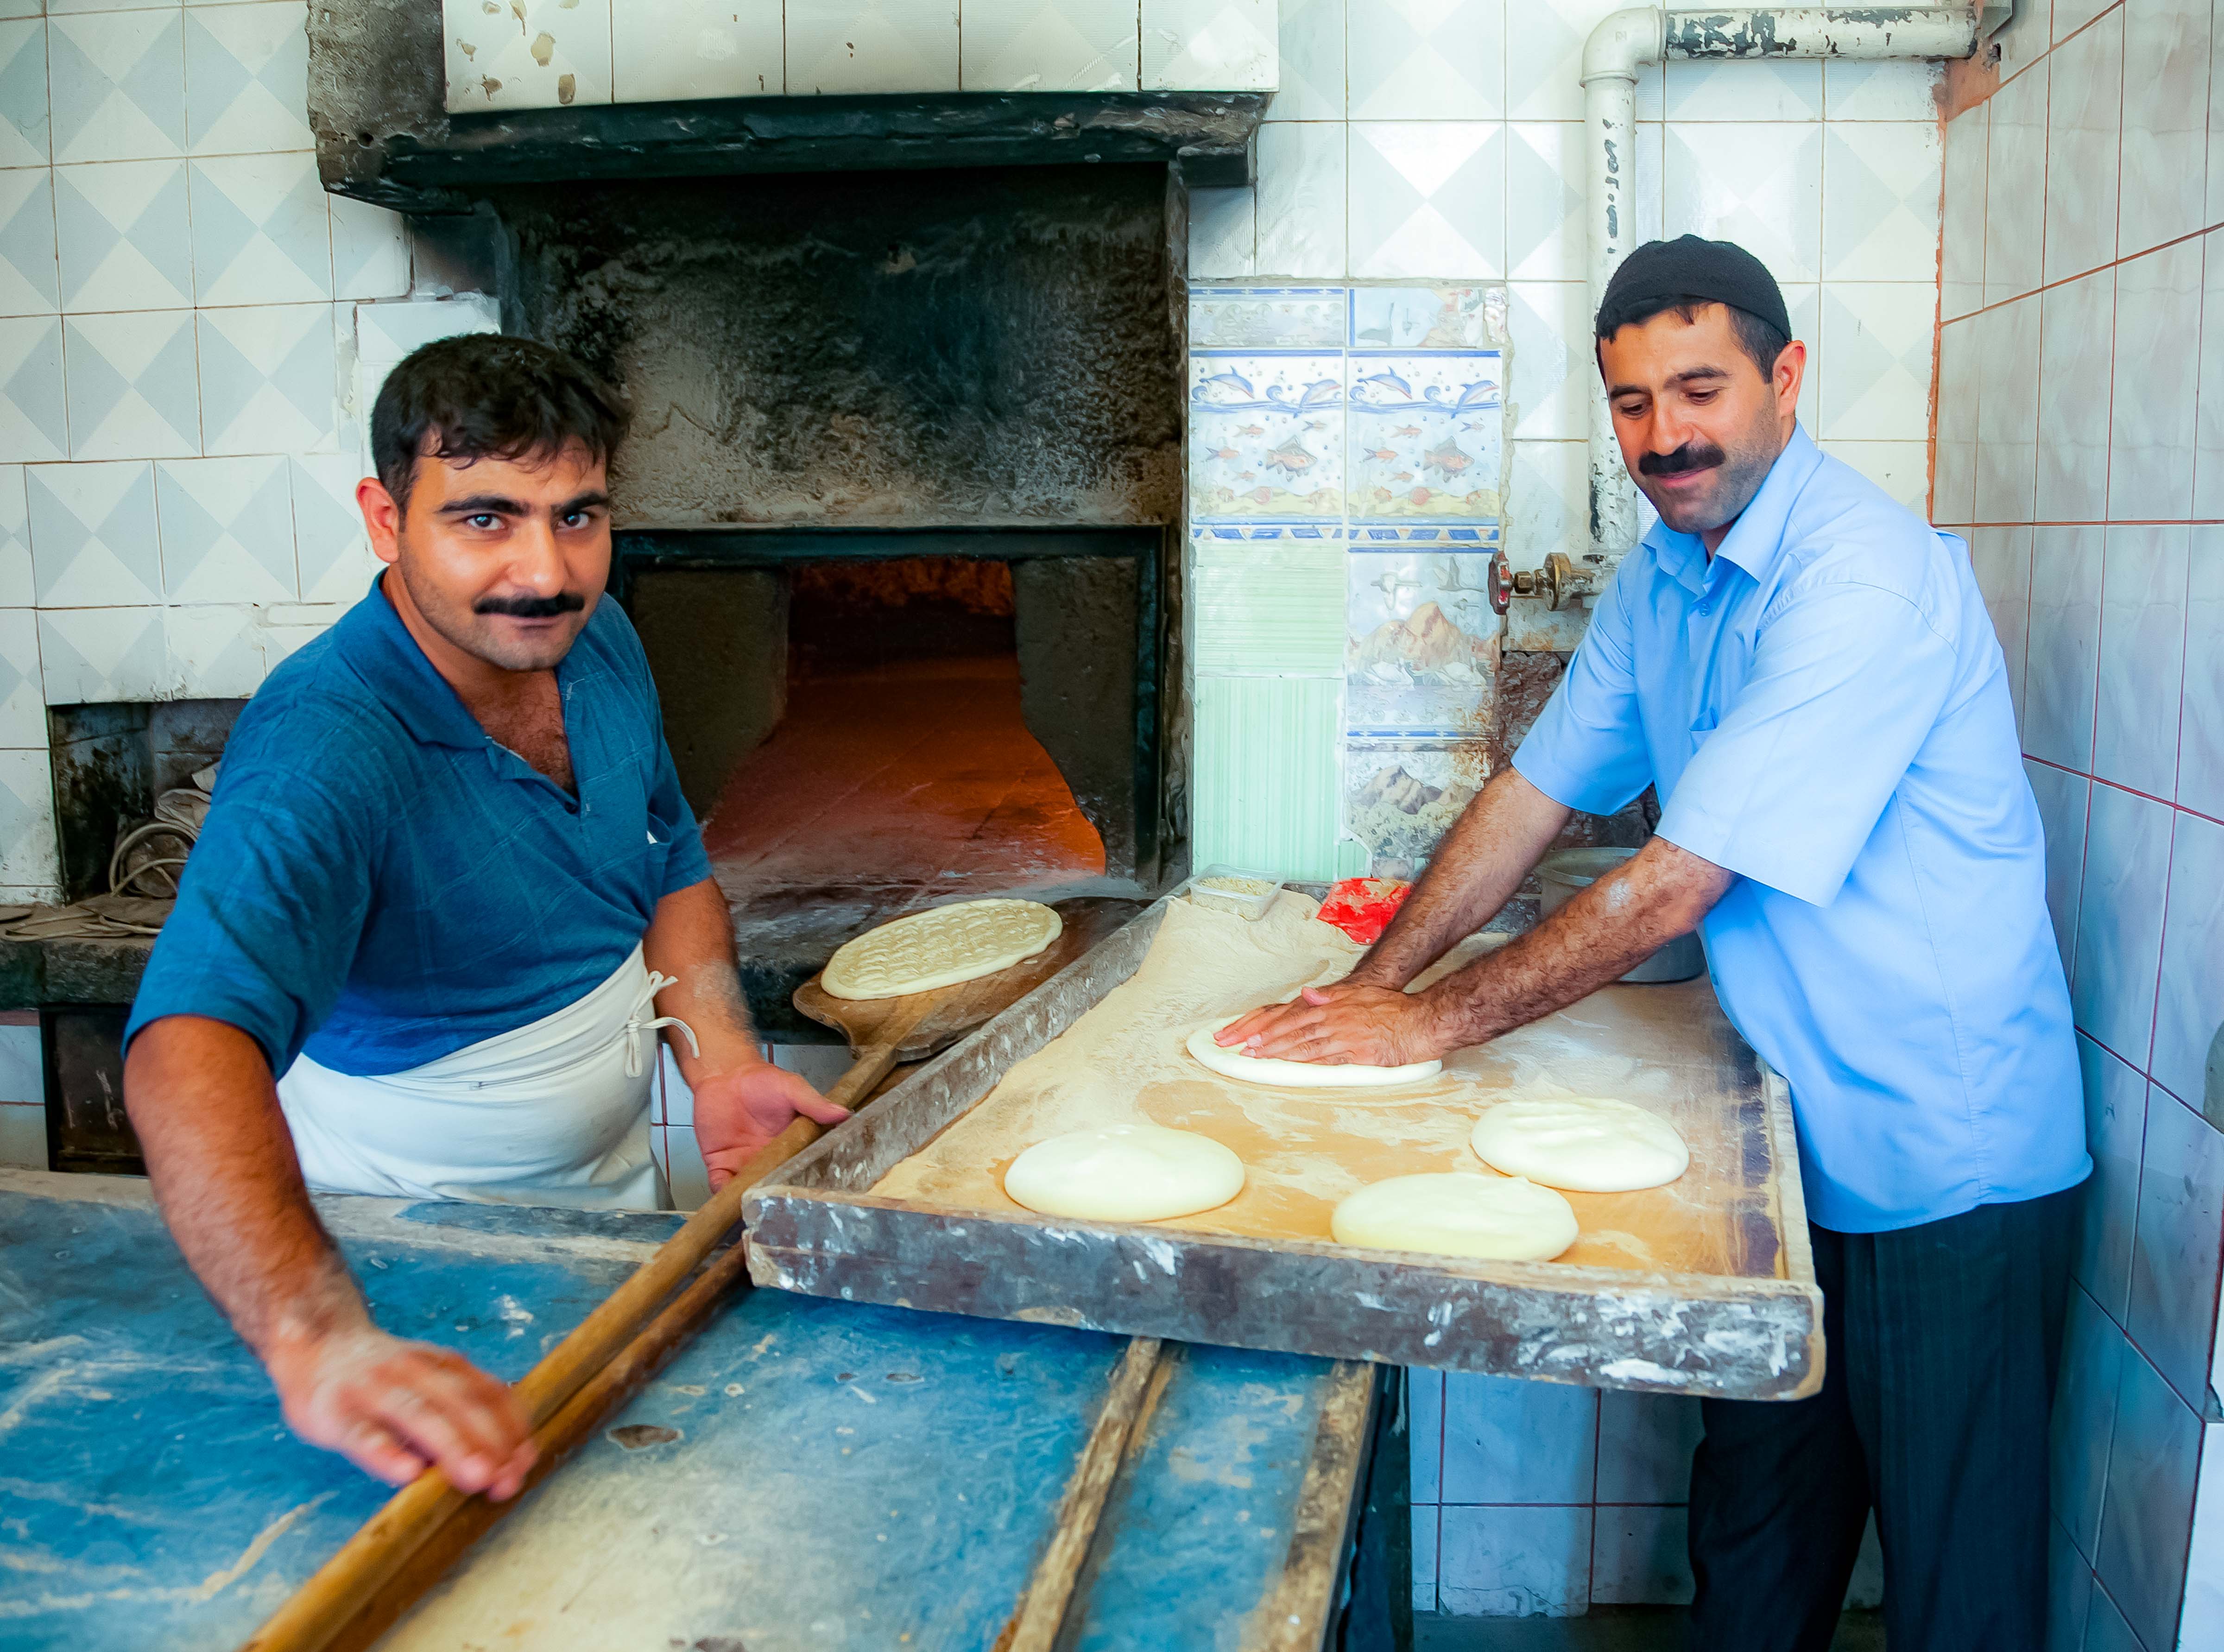 Turkey, Diyarbakir Prov, Chefs, 2010, IMG 8758